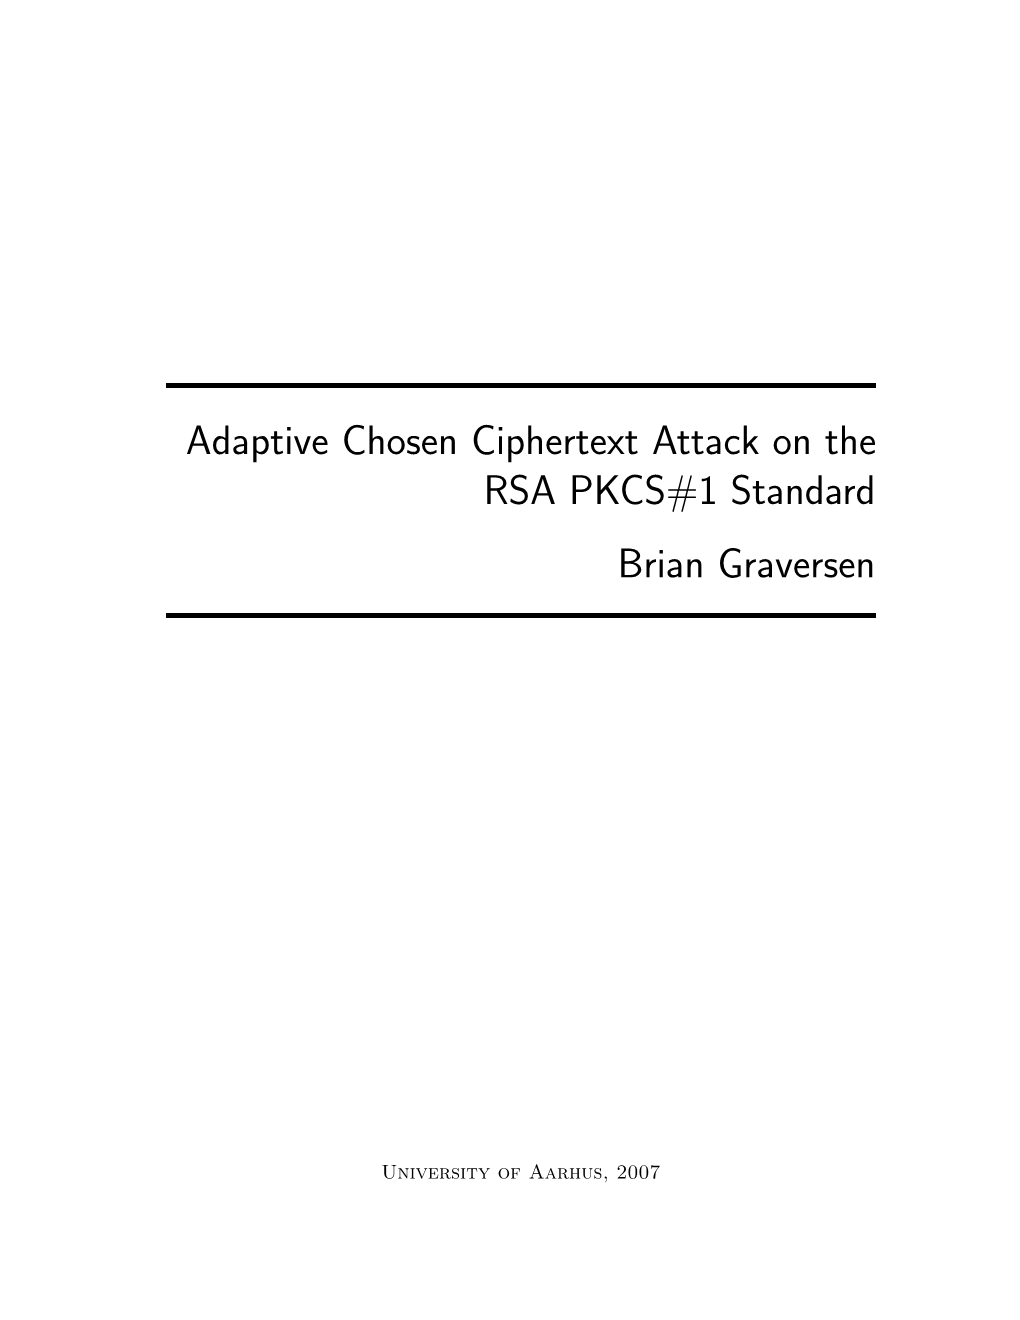 Adaptive Chosen Ciphertext Attack on the RSA PKCS#1 Standard Brian Graversen